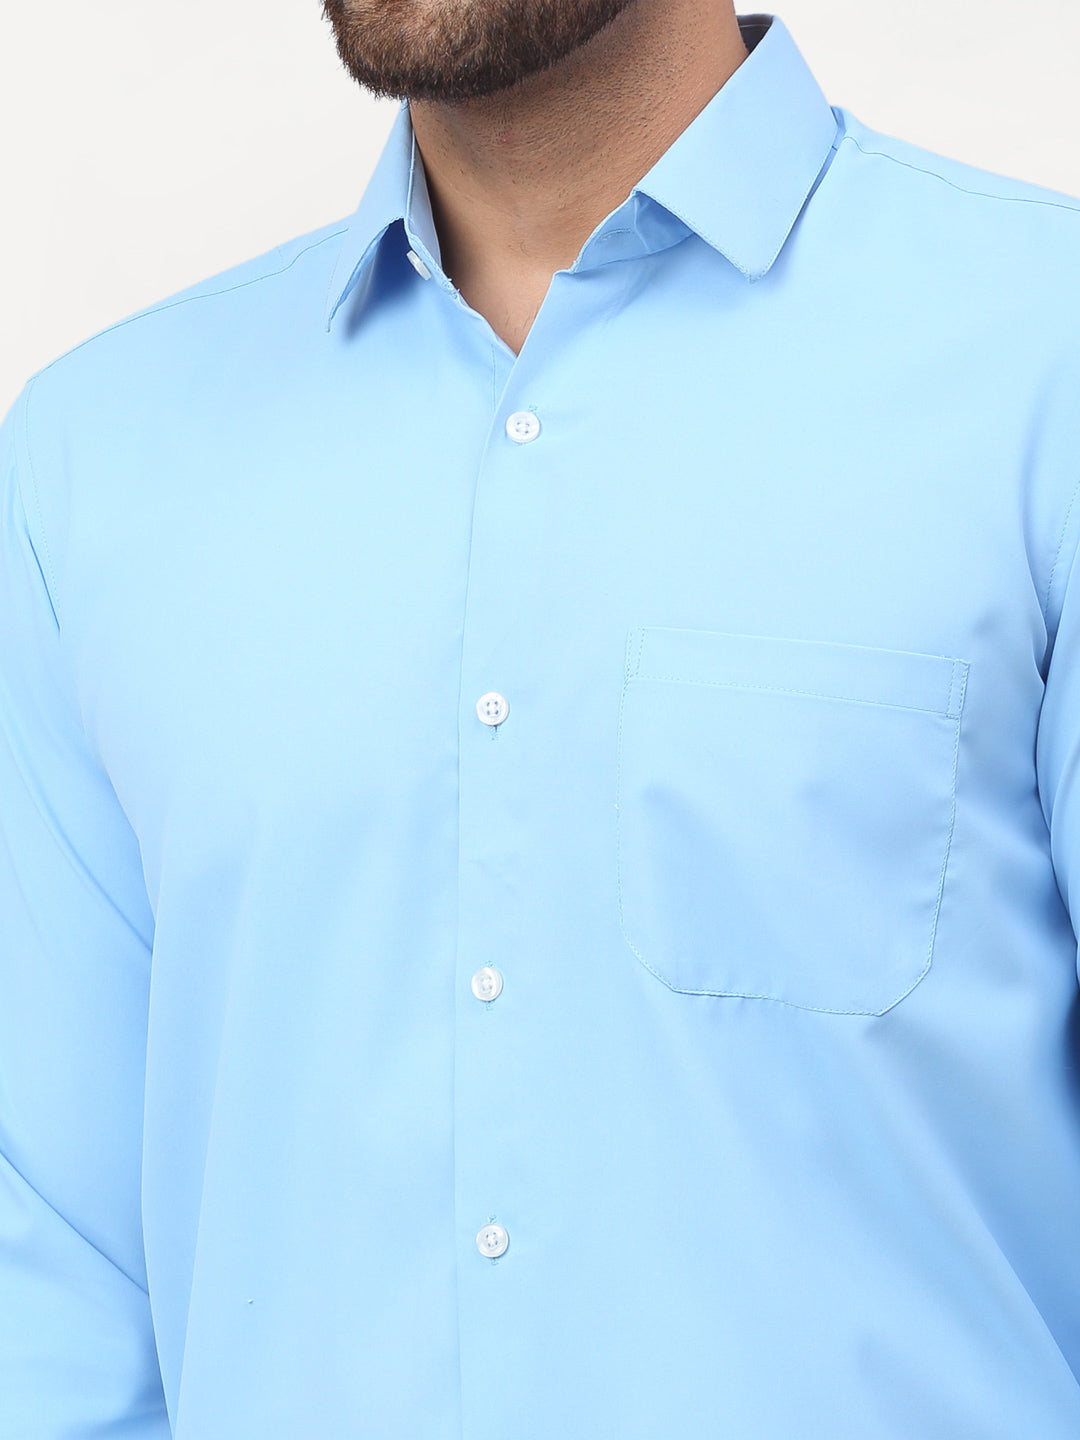 Men's Blue Solid Formal Shirts ( SF 777Light-Blue ) - Jainish